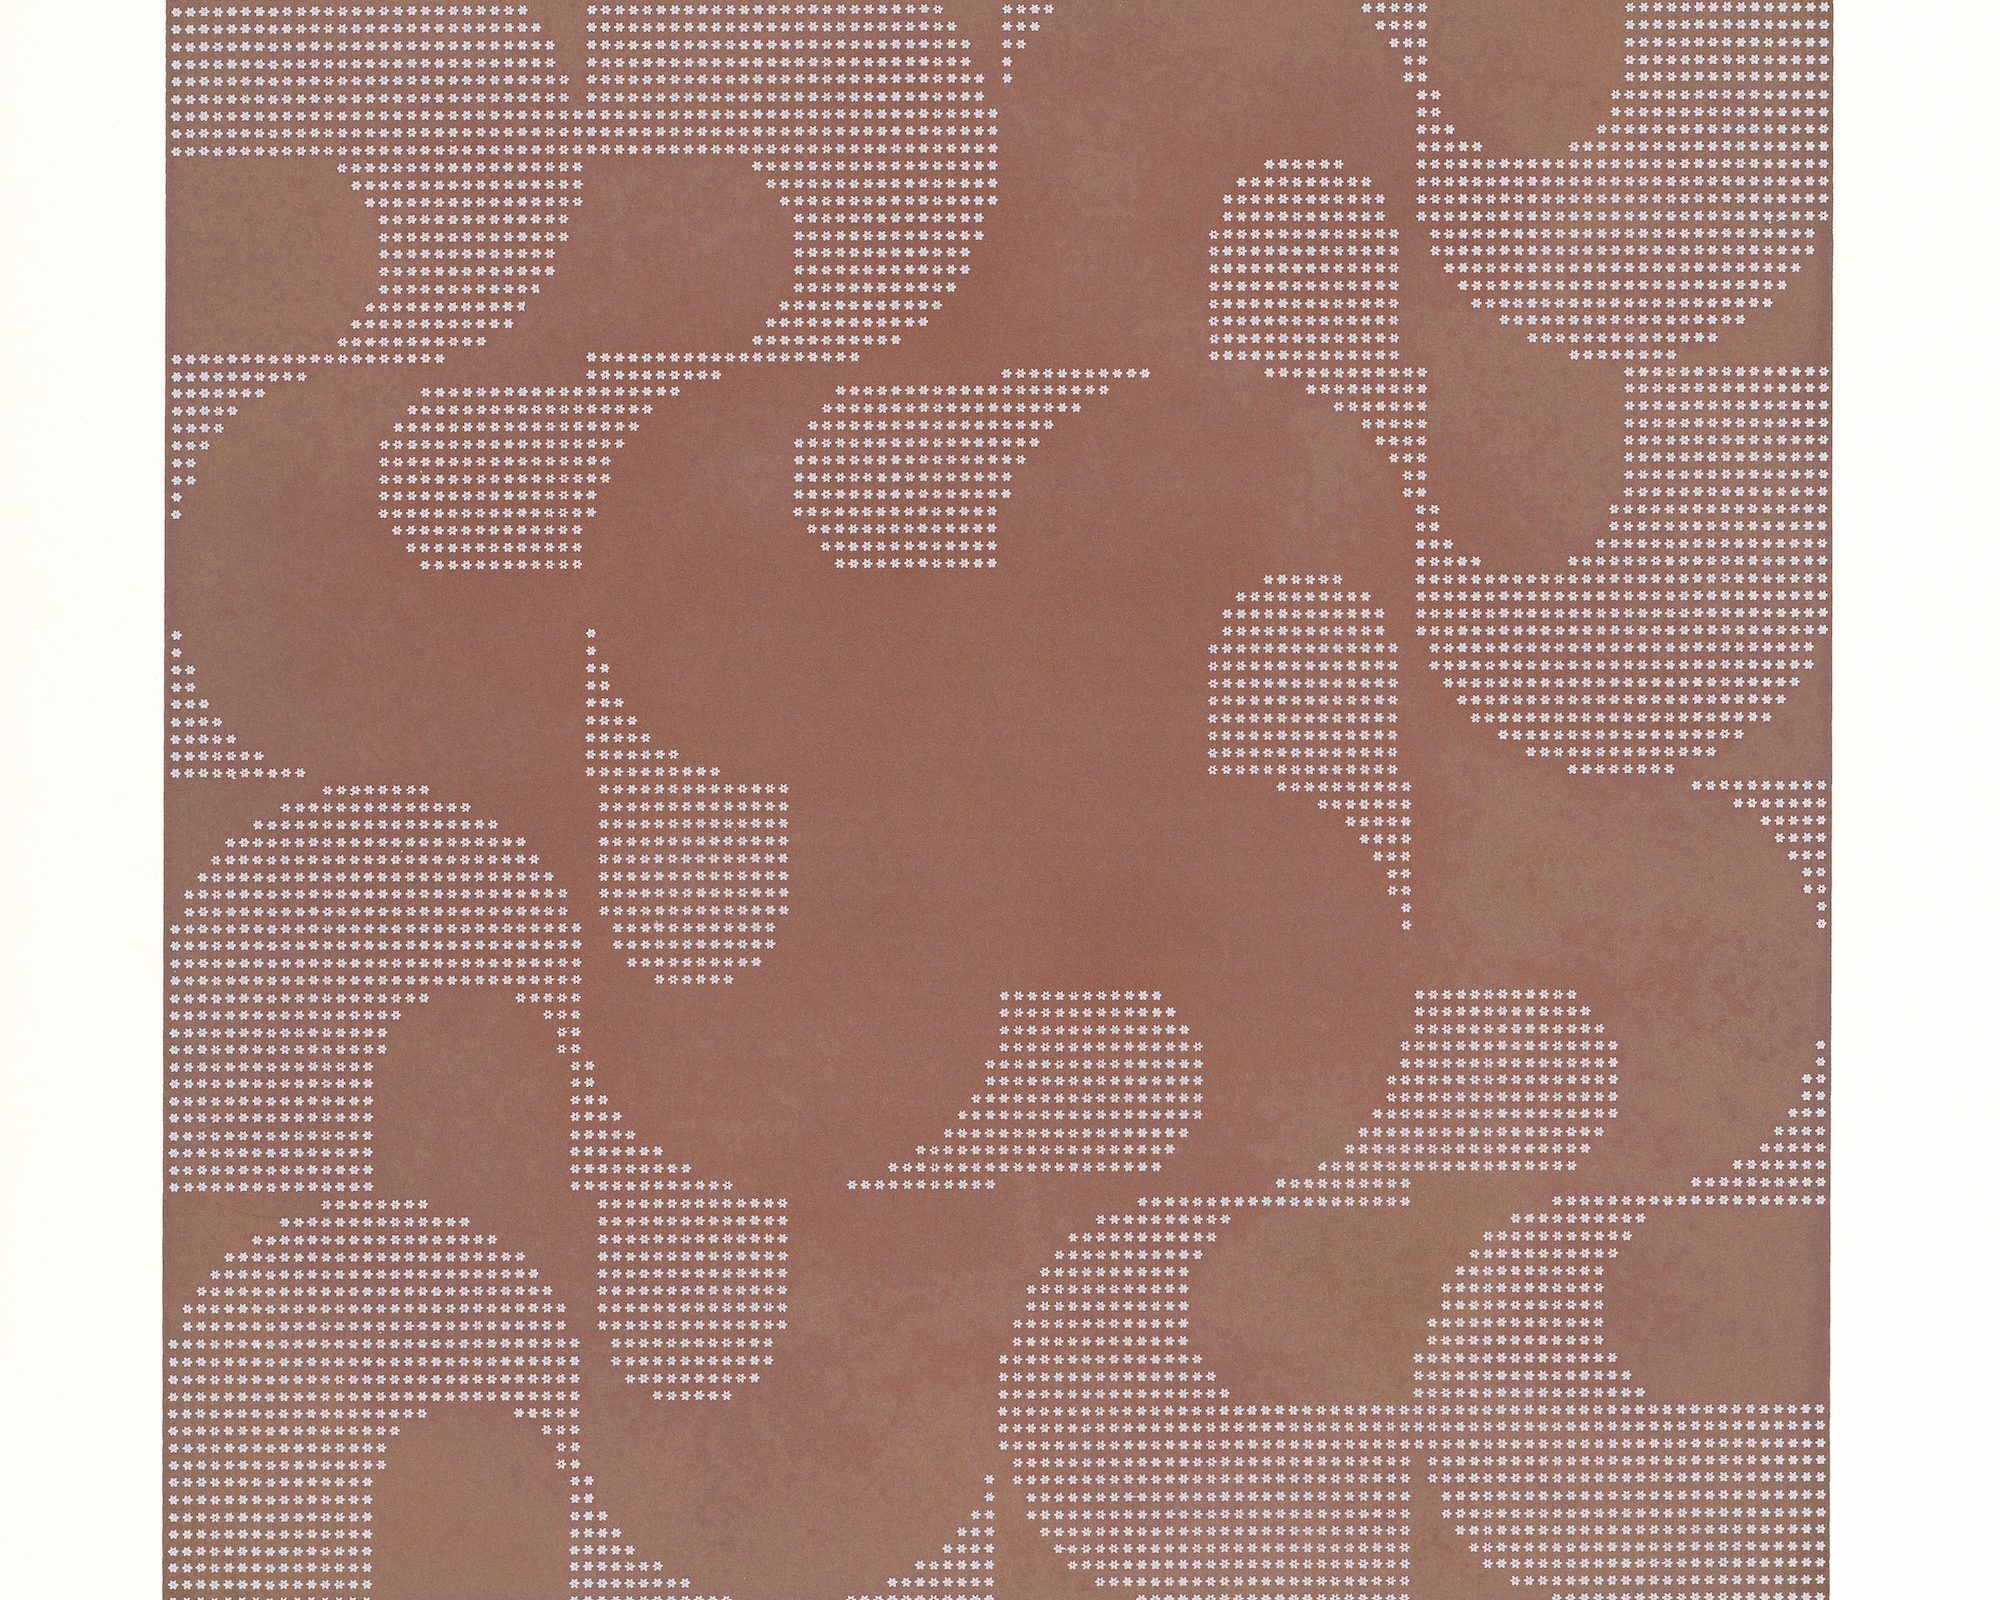 Manuel Barbadillo, untitled, screenprint on paper, 38 x 38 cm, 1972